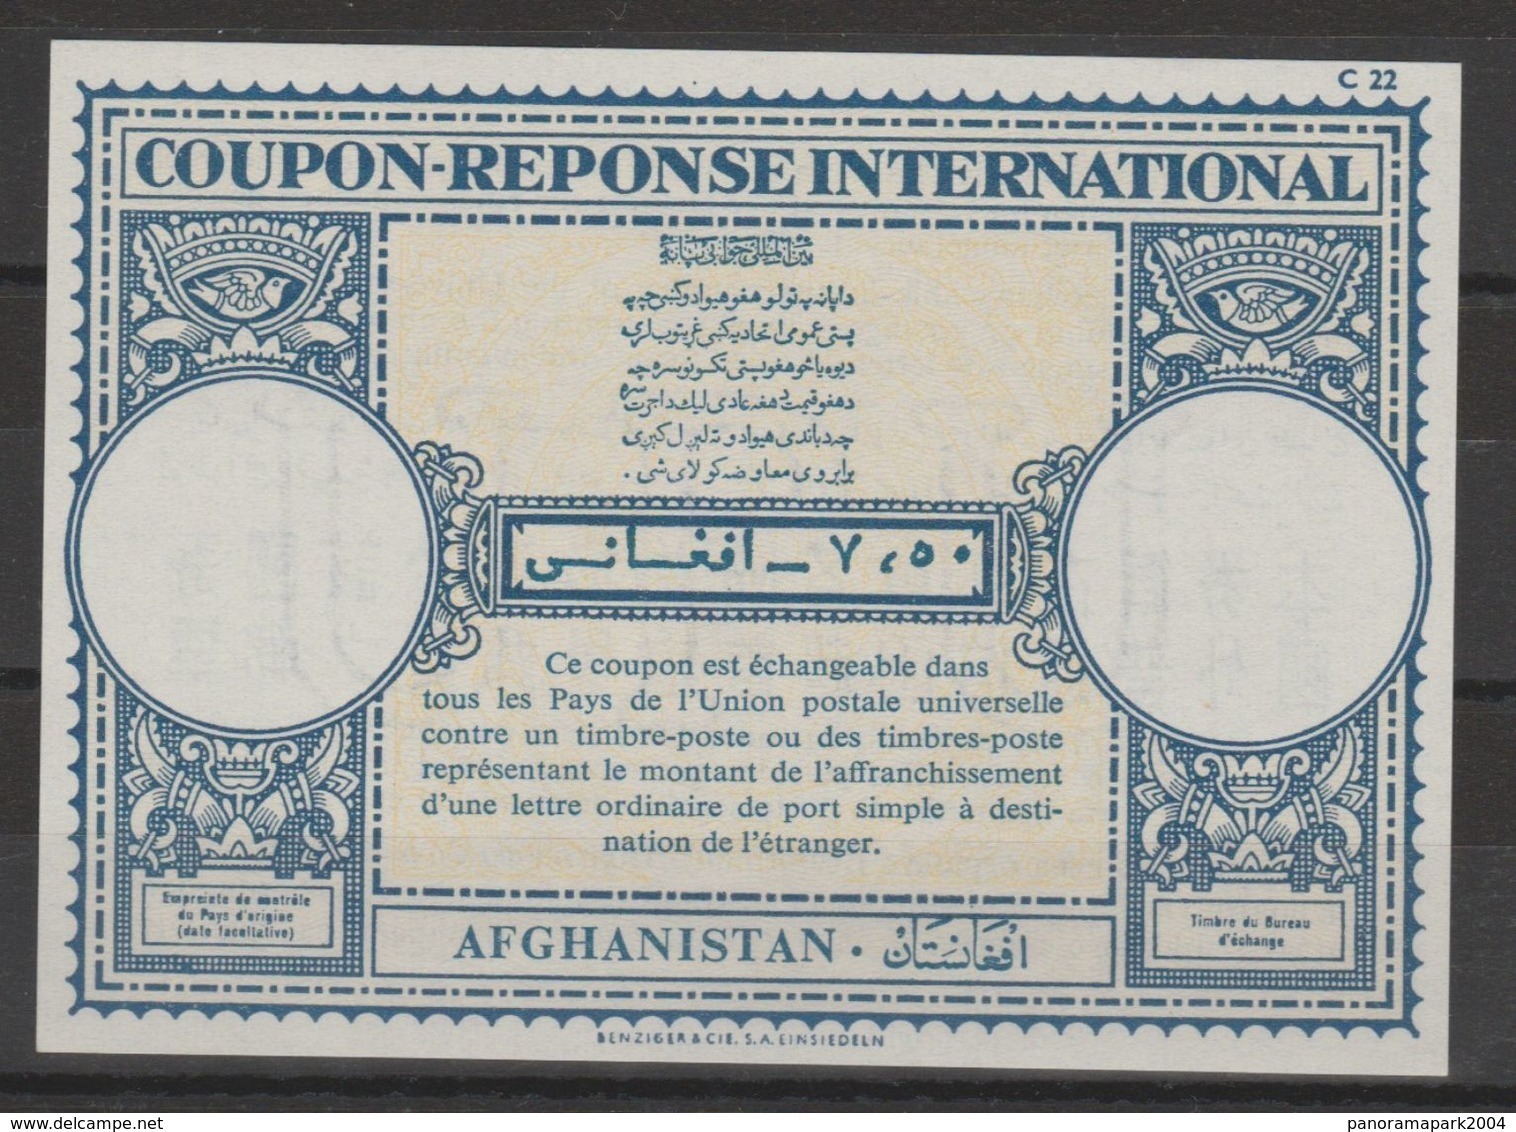 Afghanistan UPU Union Postale Universelle C22 COUPON-REPONSE INTERNATIONAL IRC IAS CRI - Afghanistan